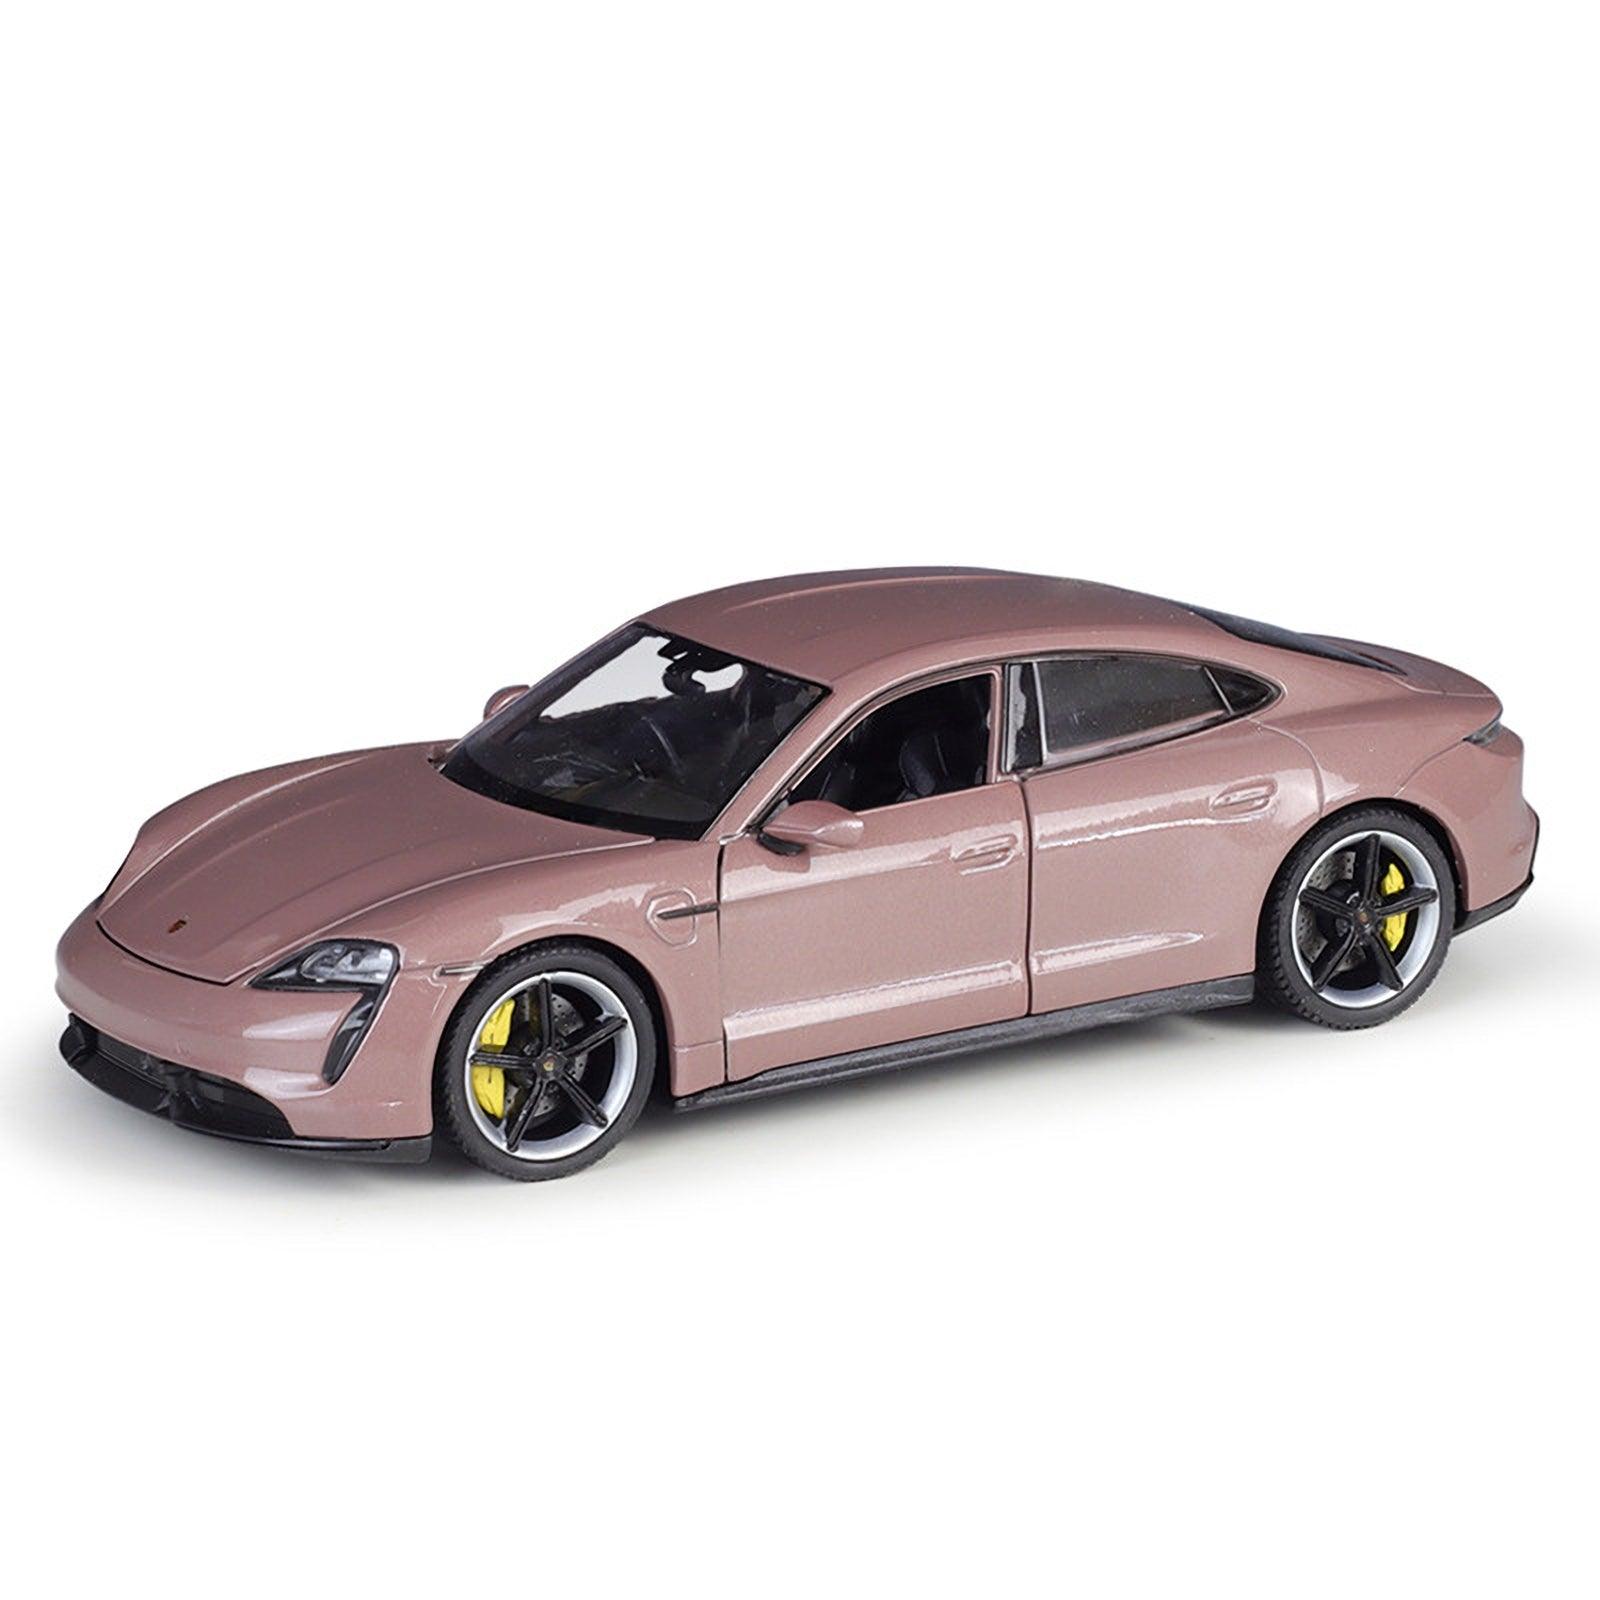 1:24 Scale Porsche Taycan Turbo Die-Cast Alloy Model Car Genuine Authorization - PANSEKtoy